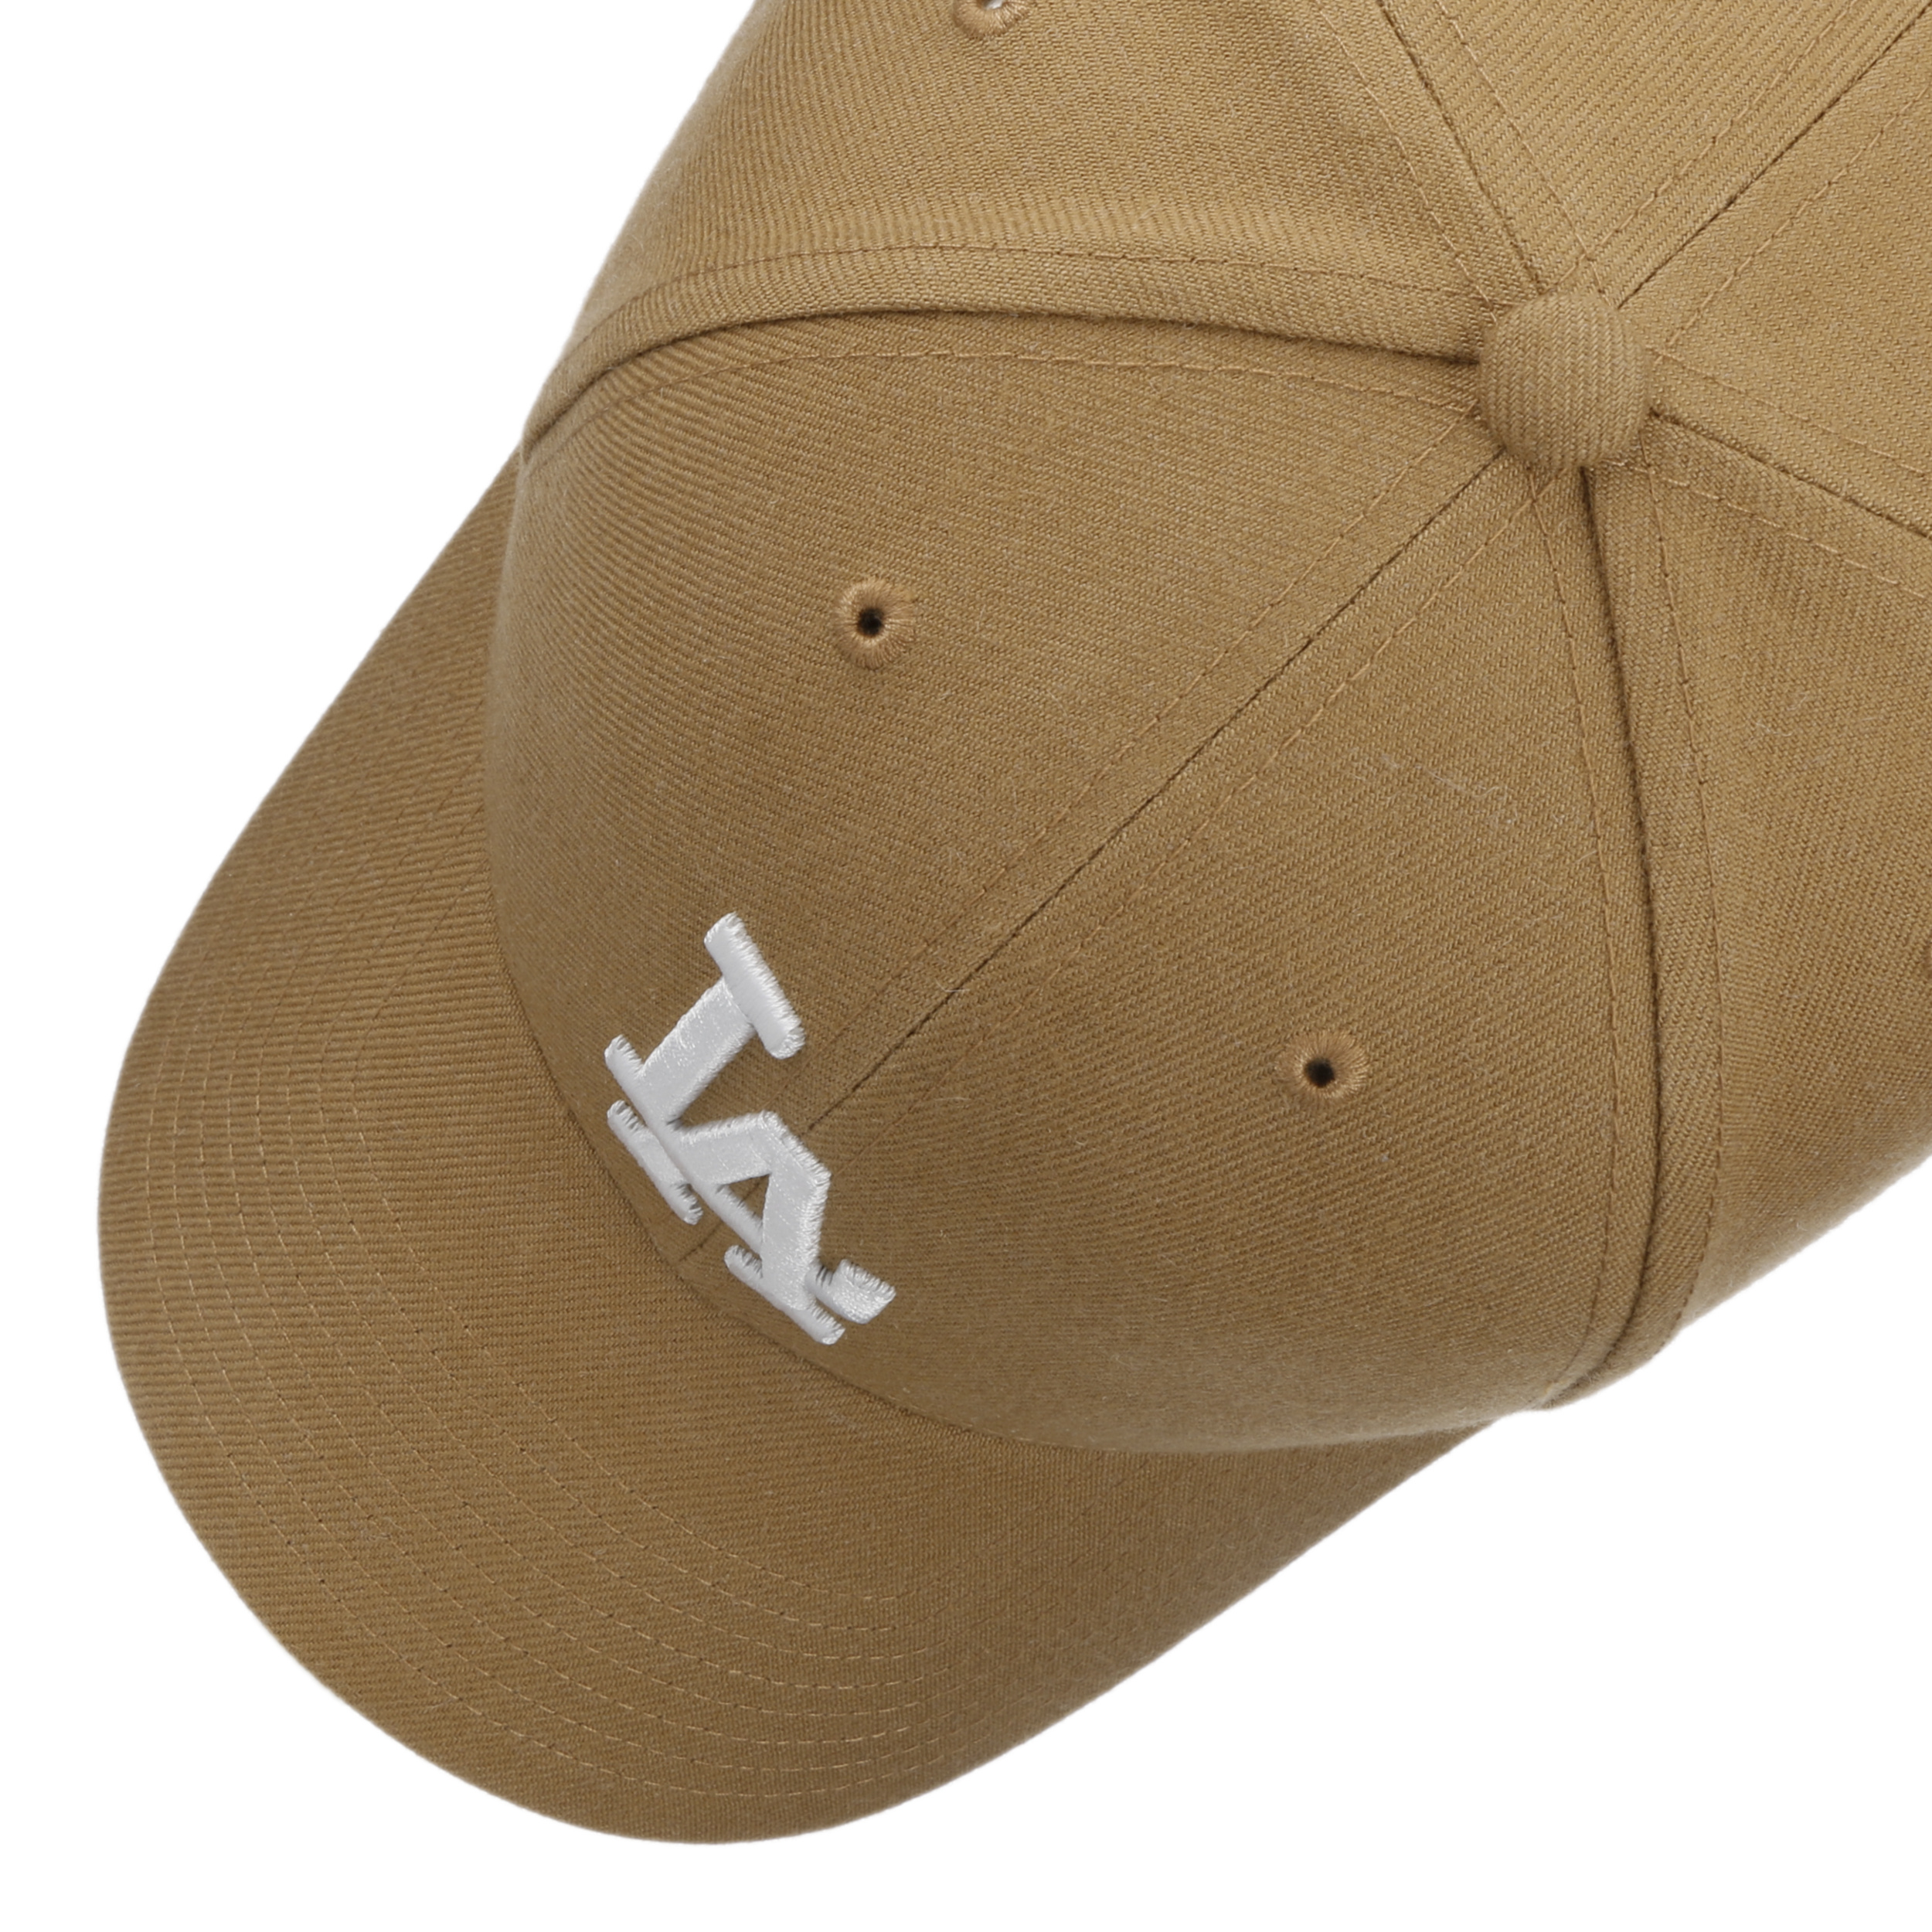 MLB LA Dodgers MVP Snapback Cap by 47 Brand